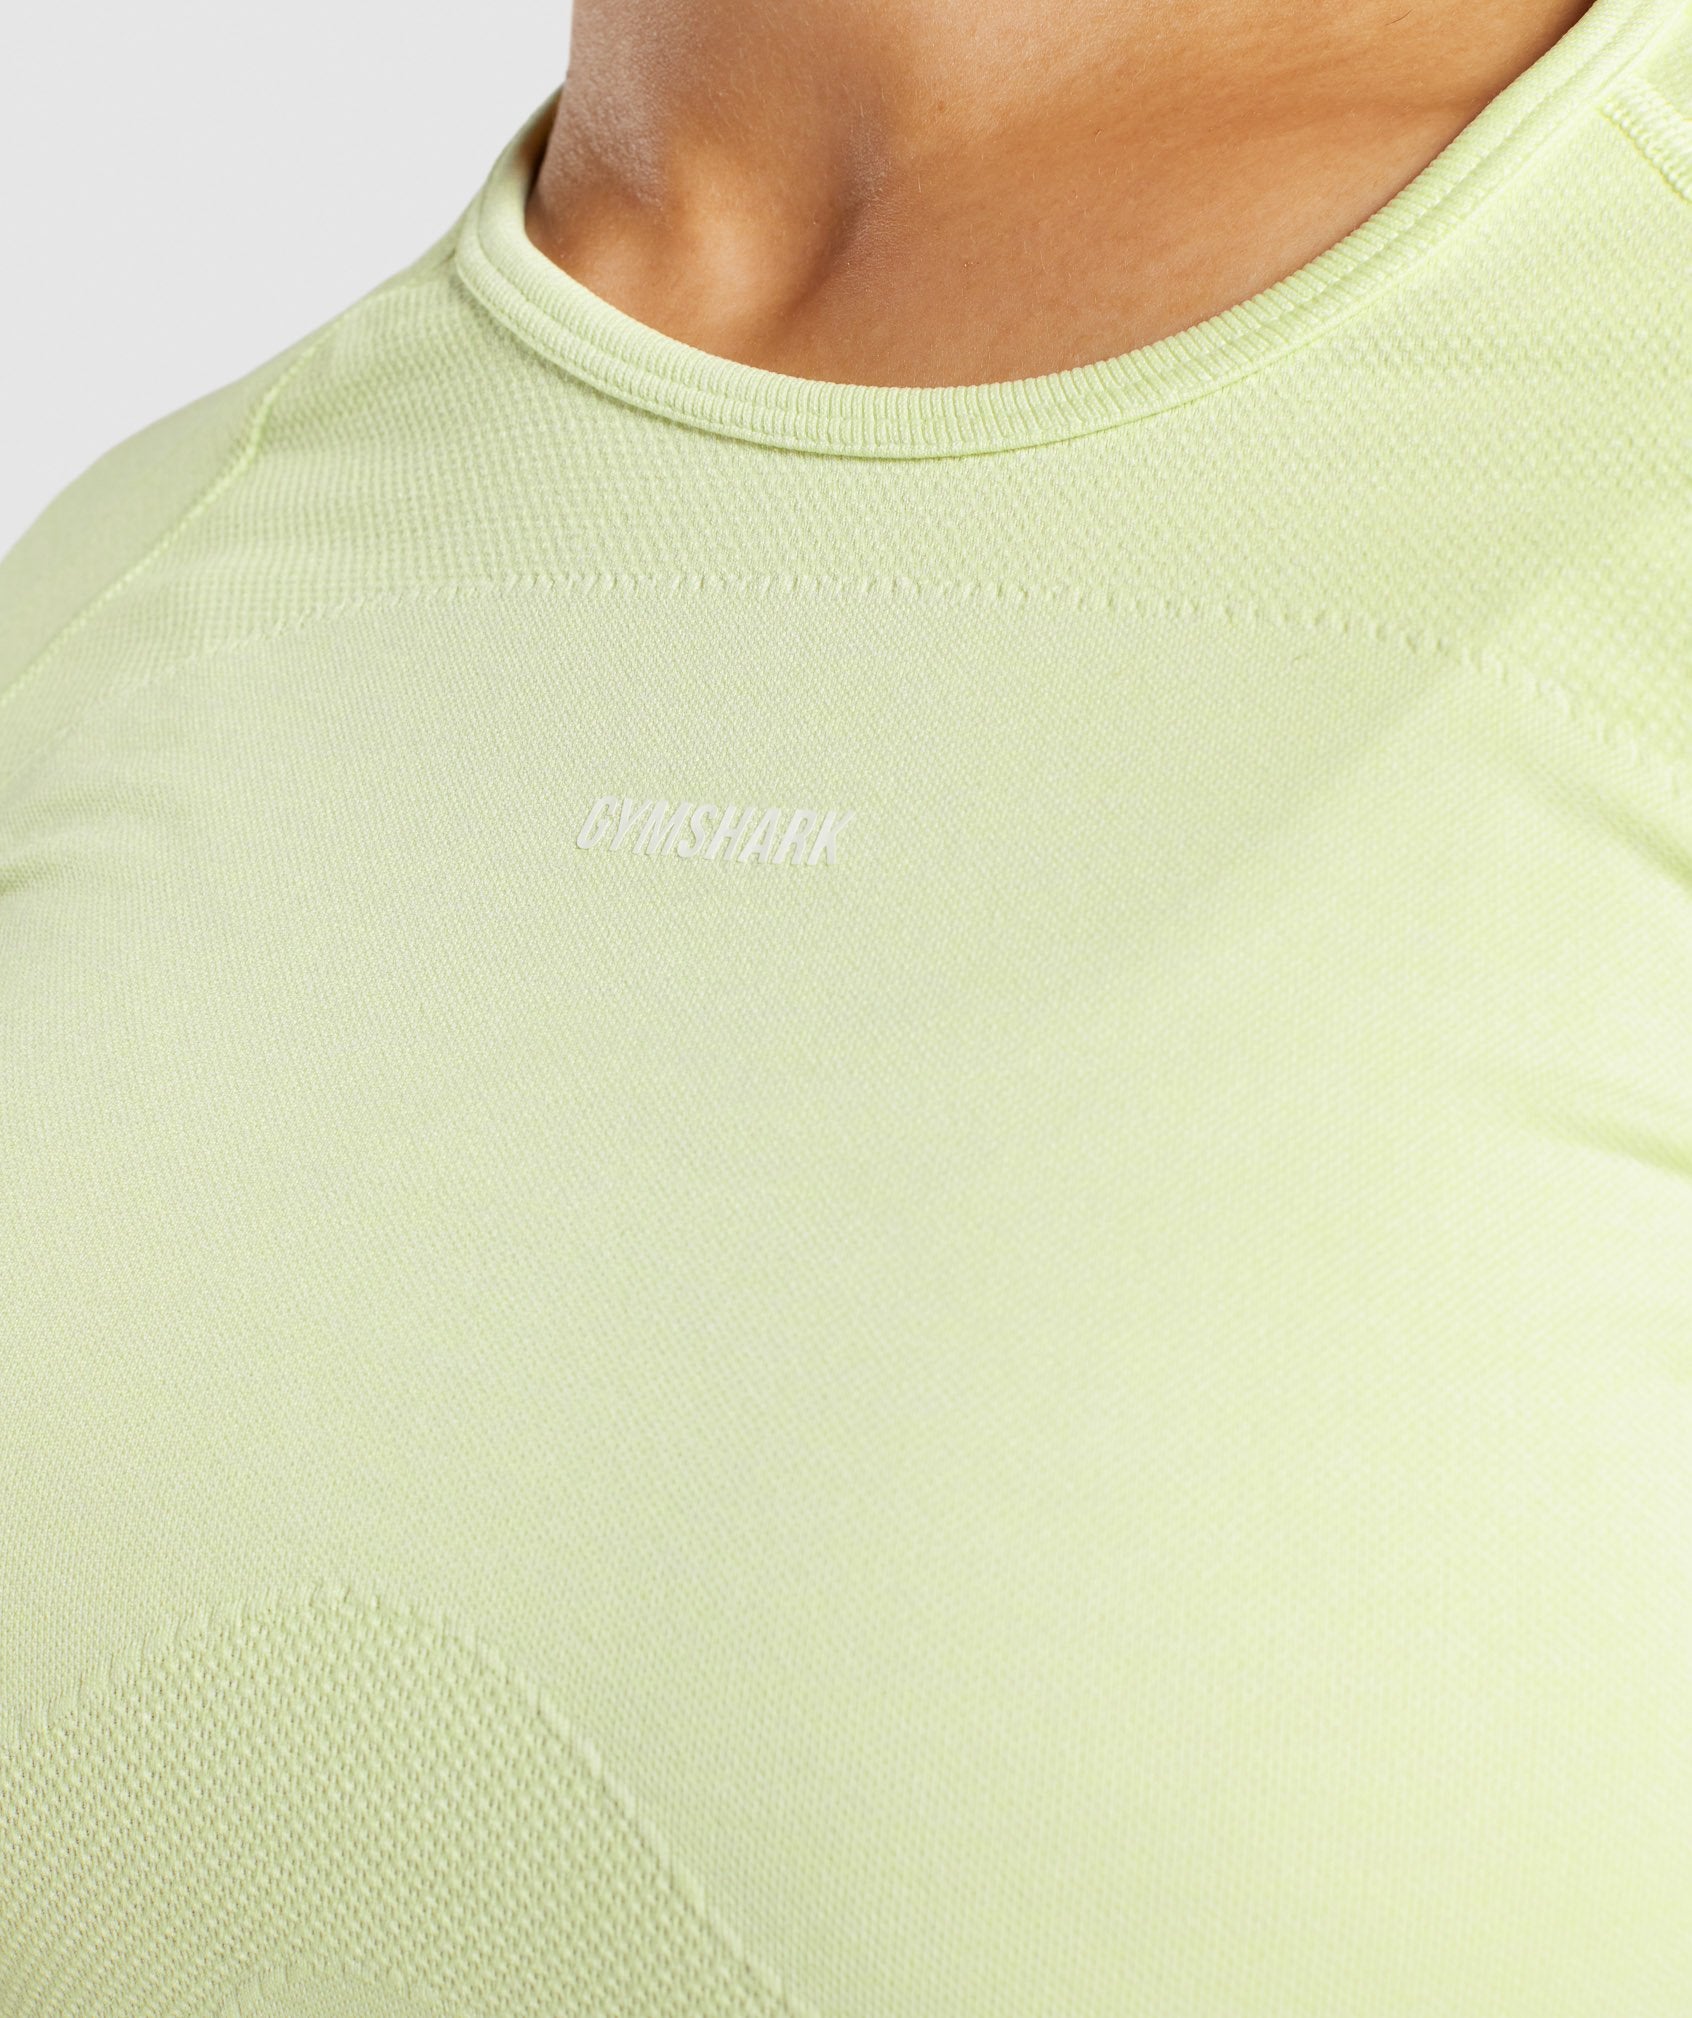 Flex Sports Long Sleeve Crop Top in Light Green Marl - view 6